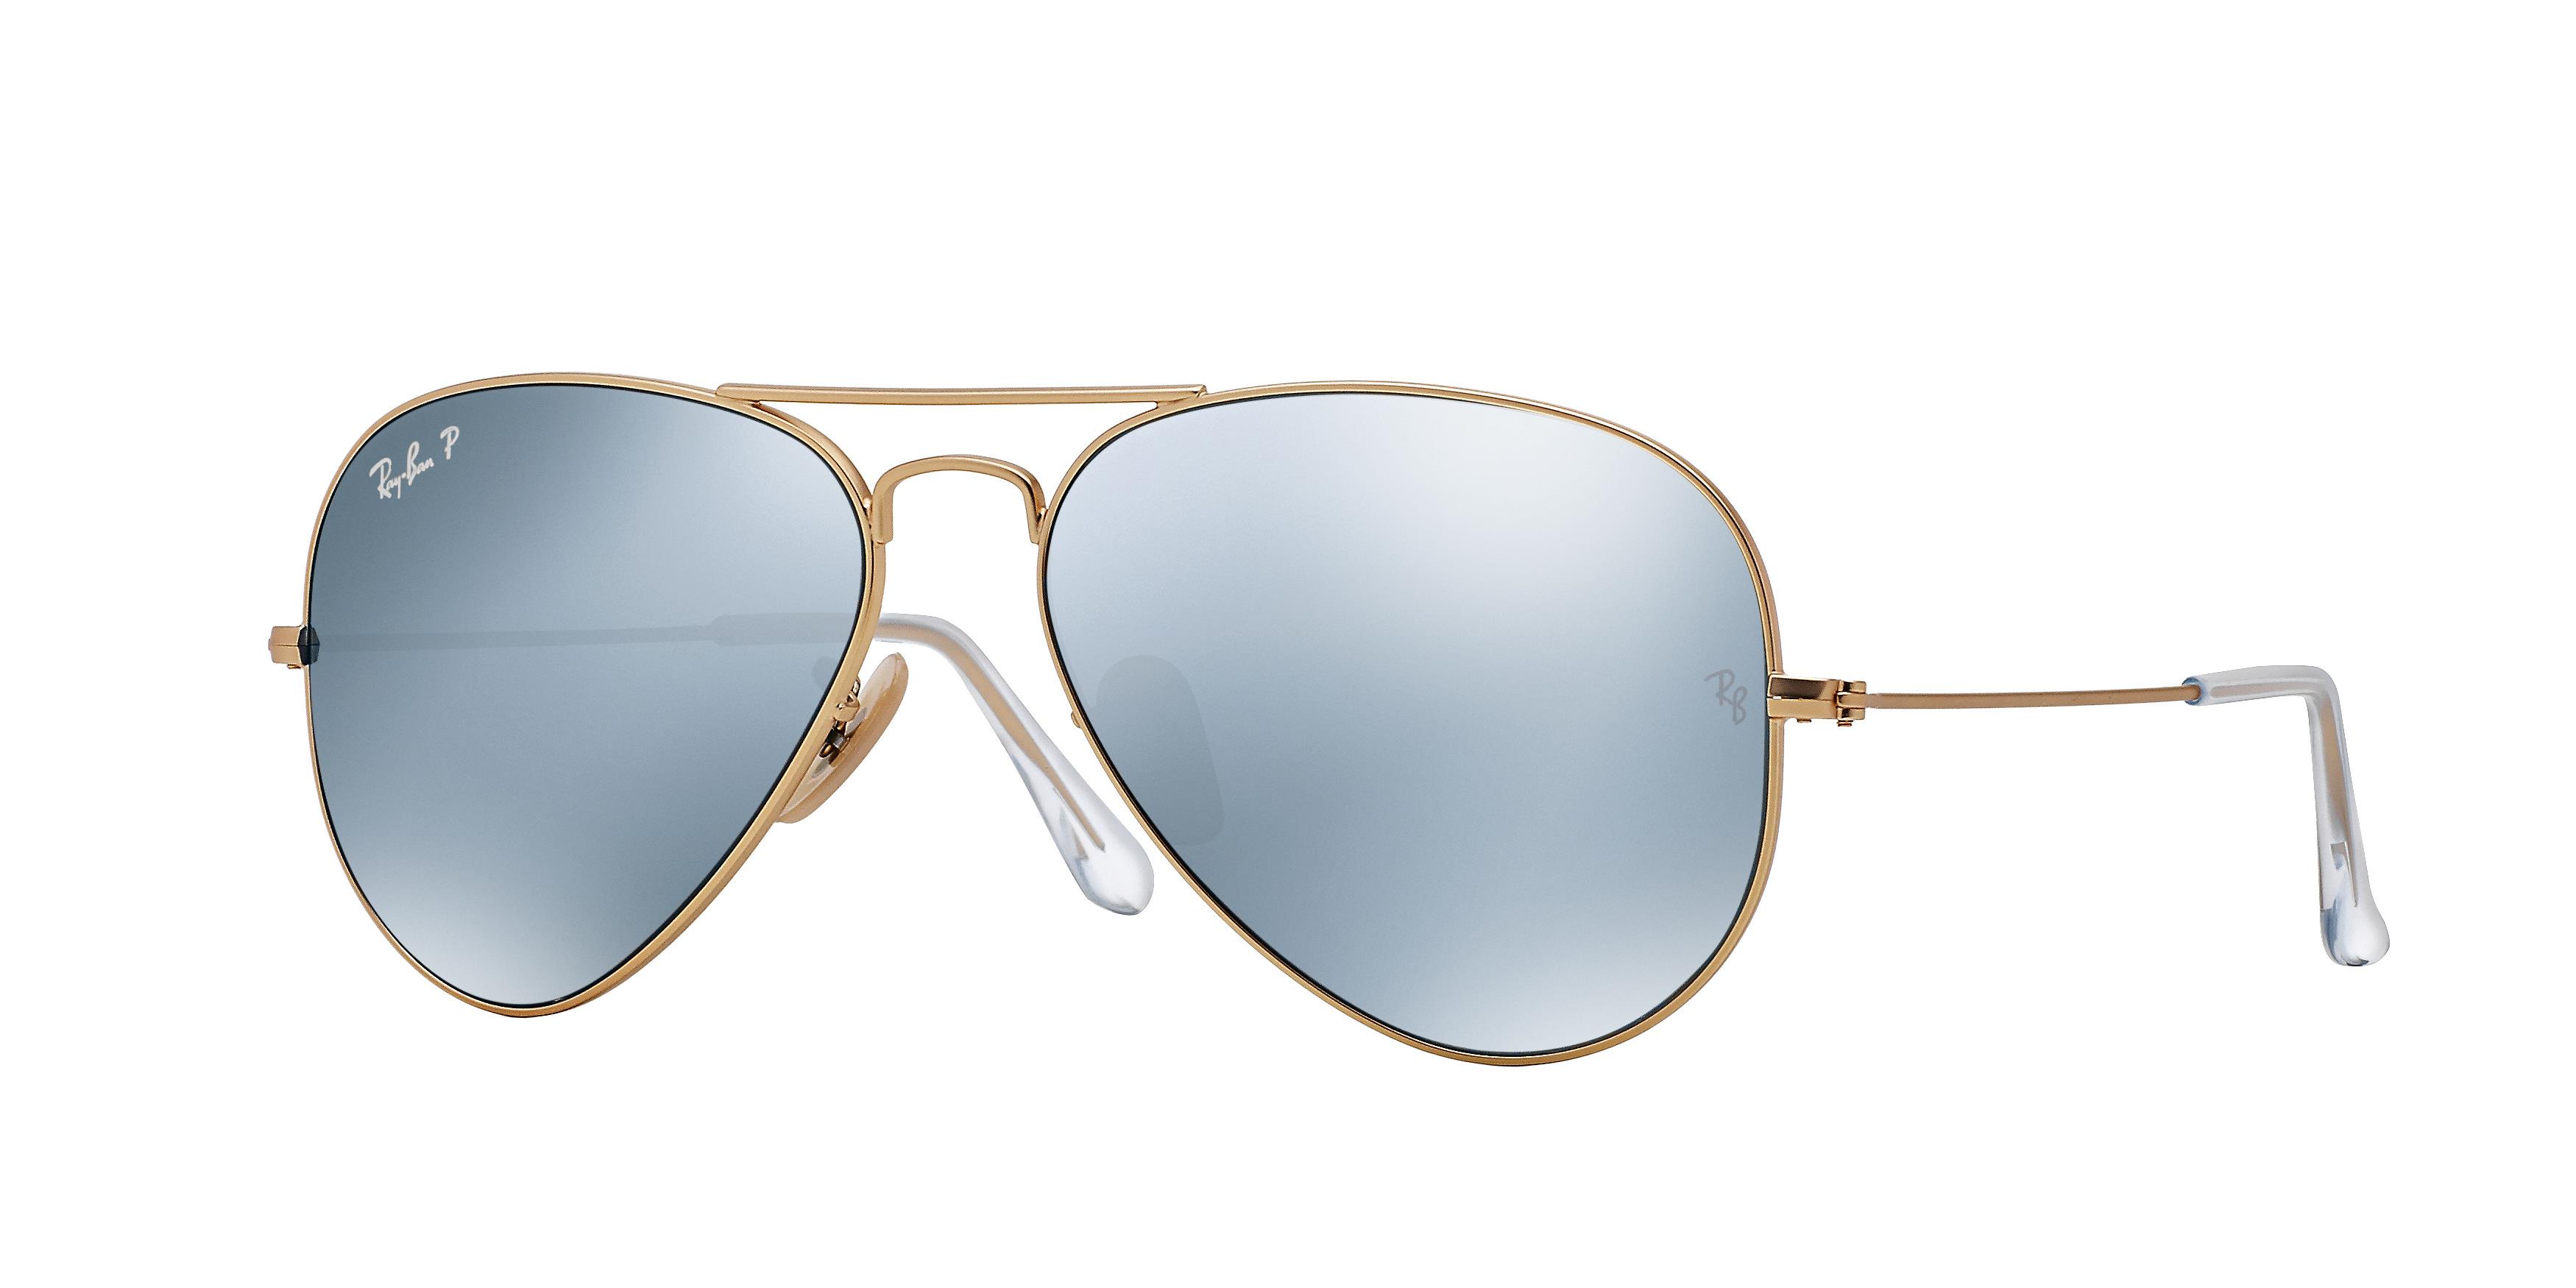 Ray Ban Rb3025 Aviator Classic Flash Mirrored Sunglasses Matte Gold Polarized Ebay